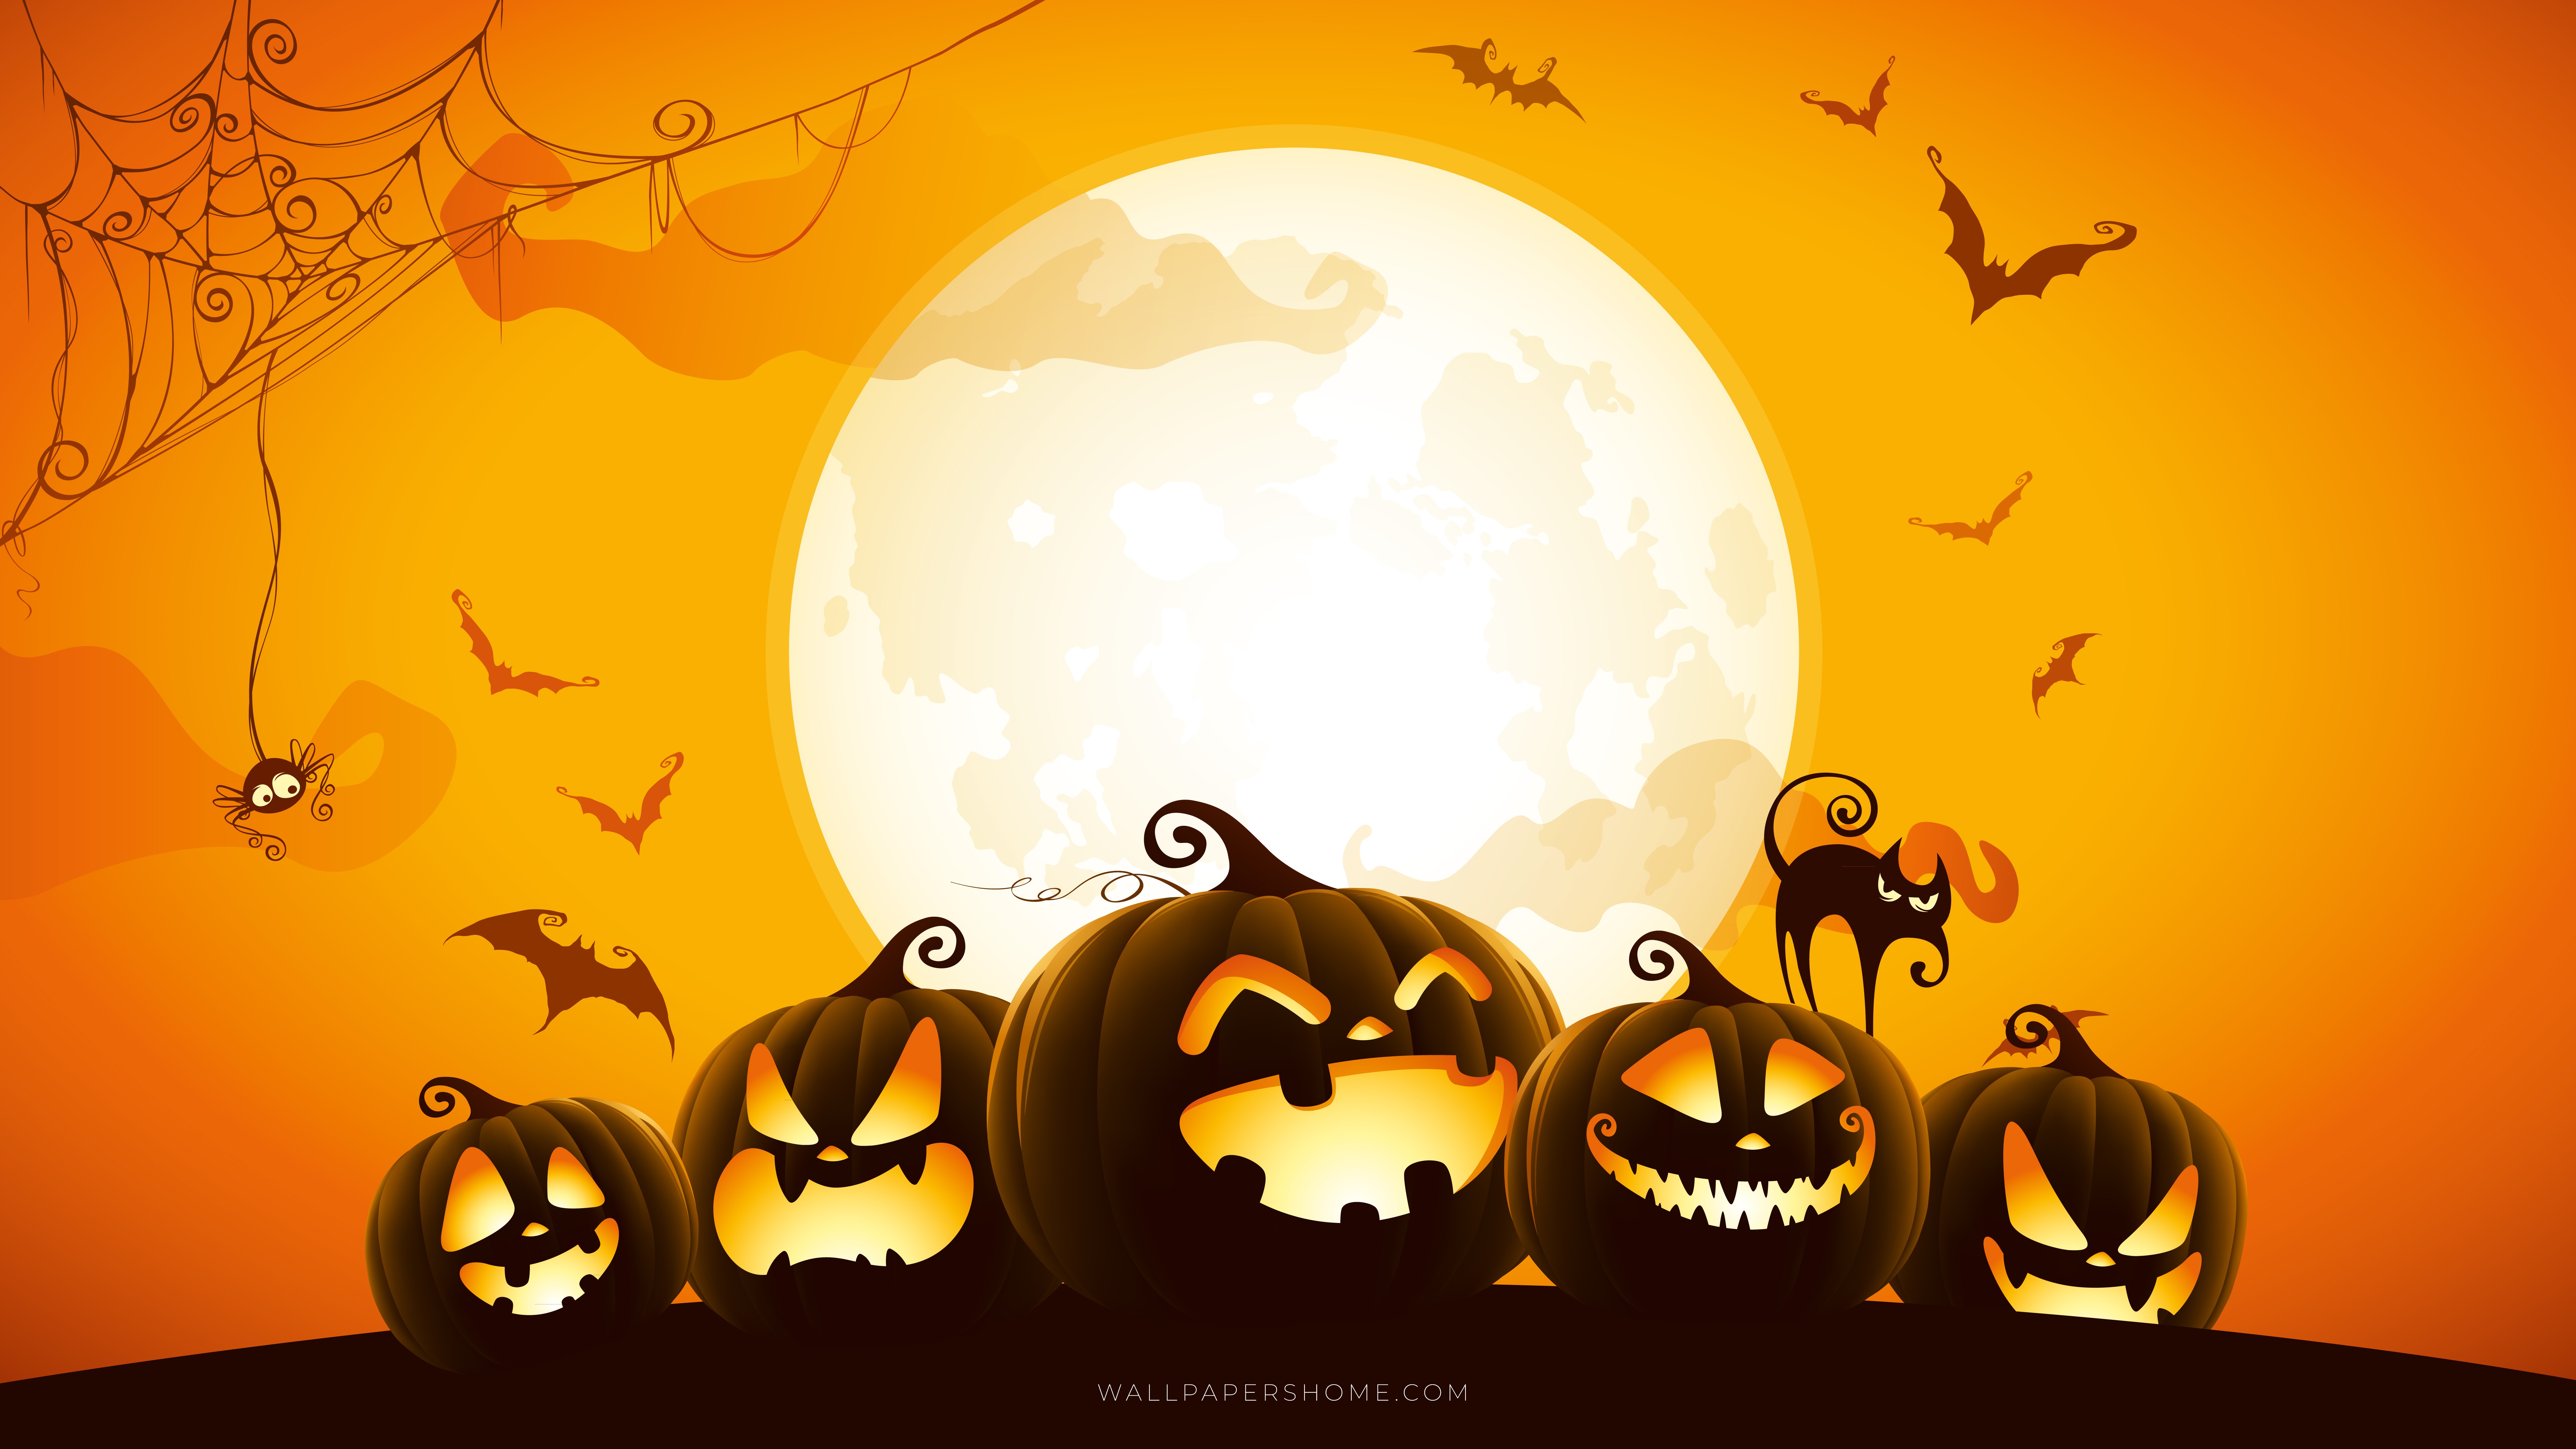 General 7680x4320 Halloween creepy pumpkin digital art